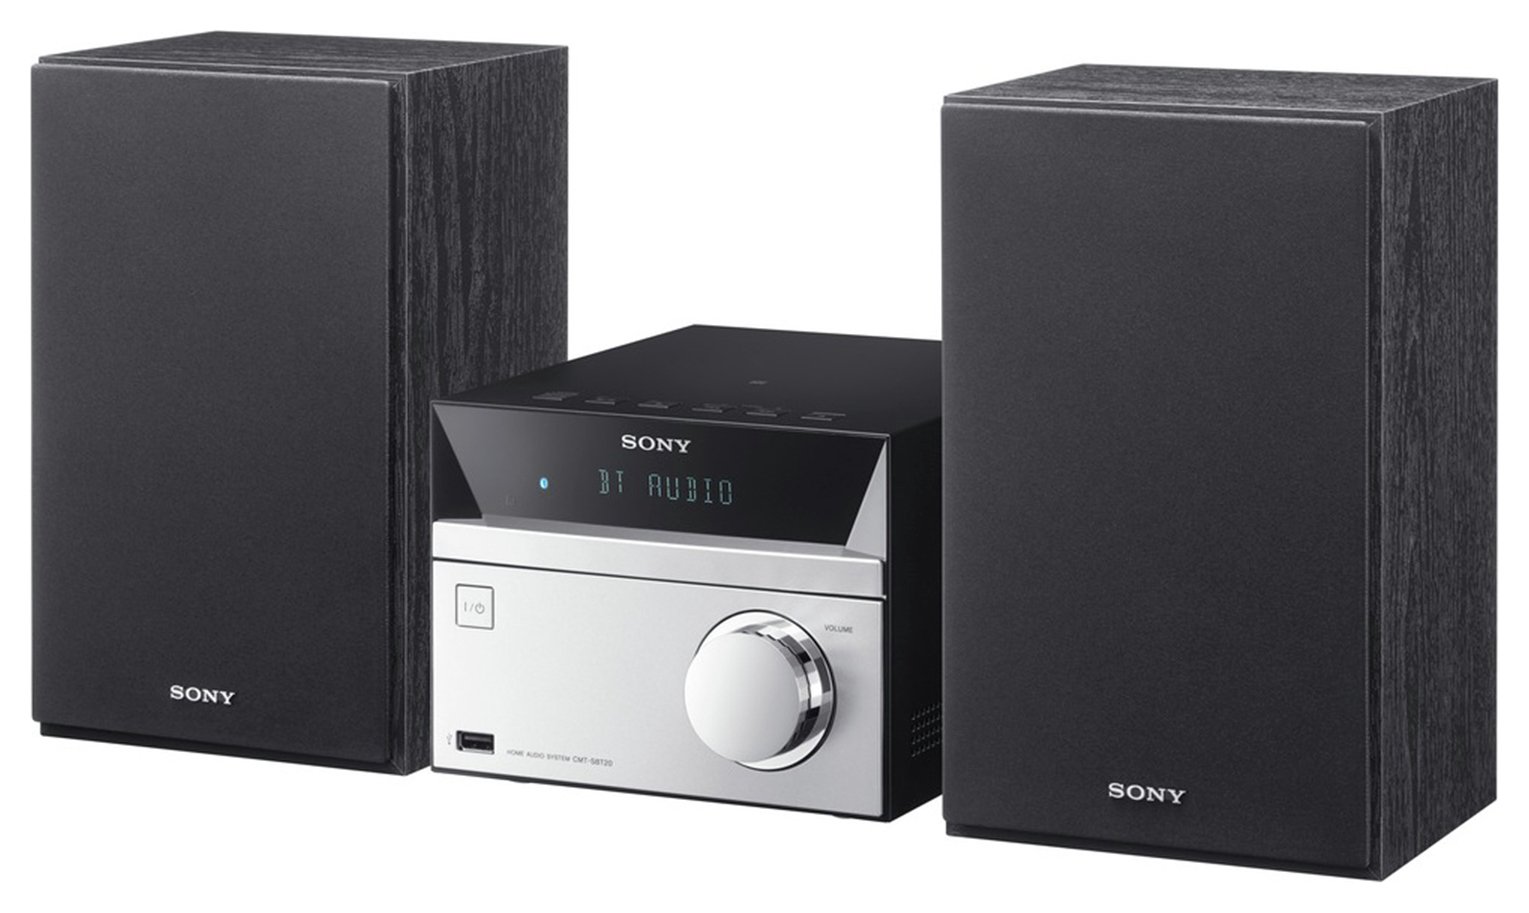 Sony CMT-S20B DAB Radio/ Micro Hi-Fi System Review